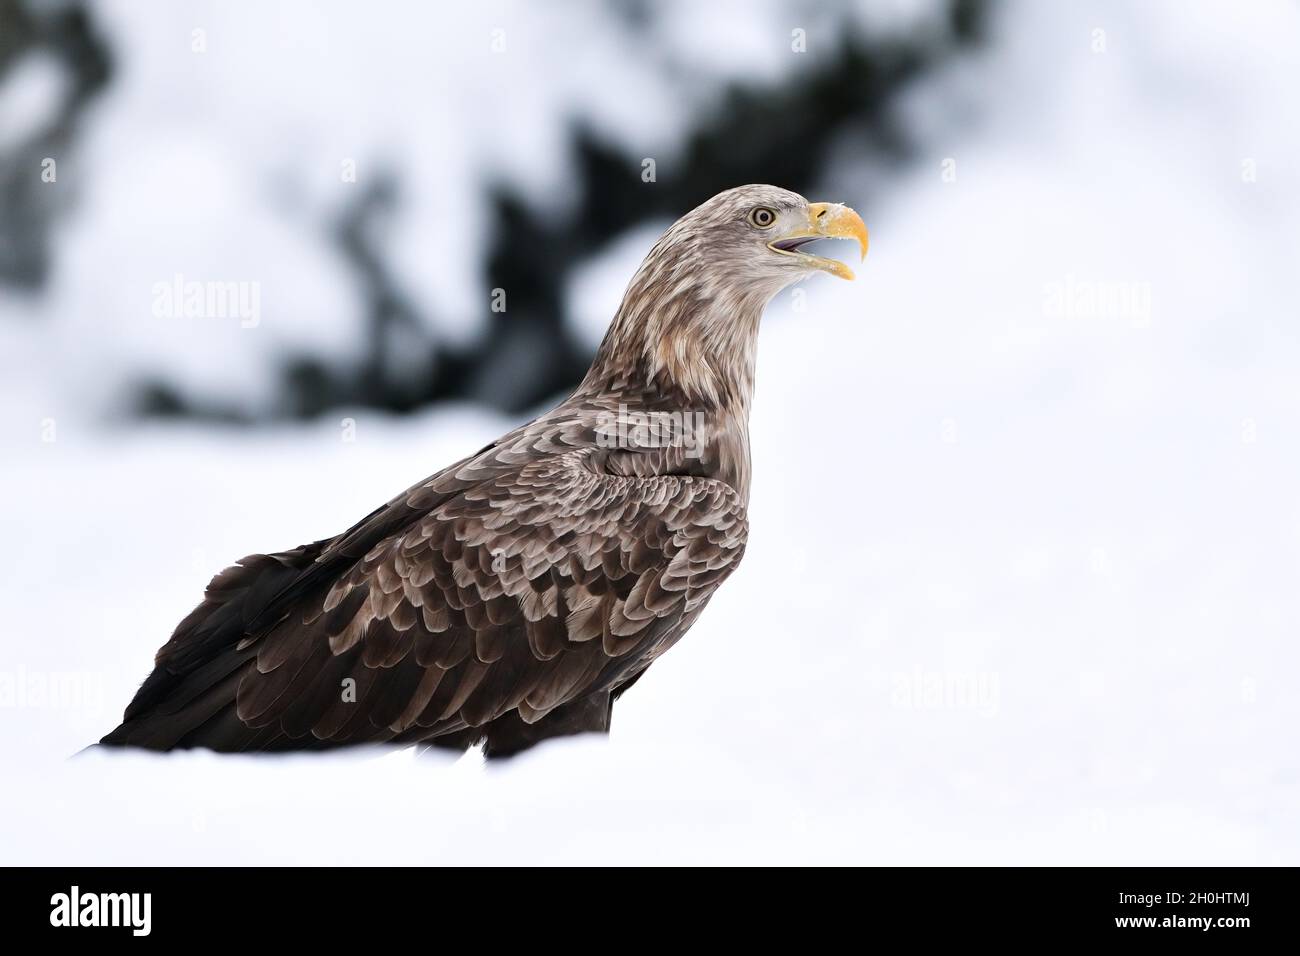 White-tailed eagle on snow in winter, beak open Stock Photo